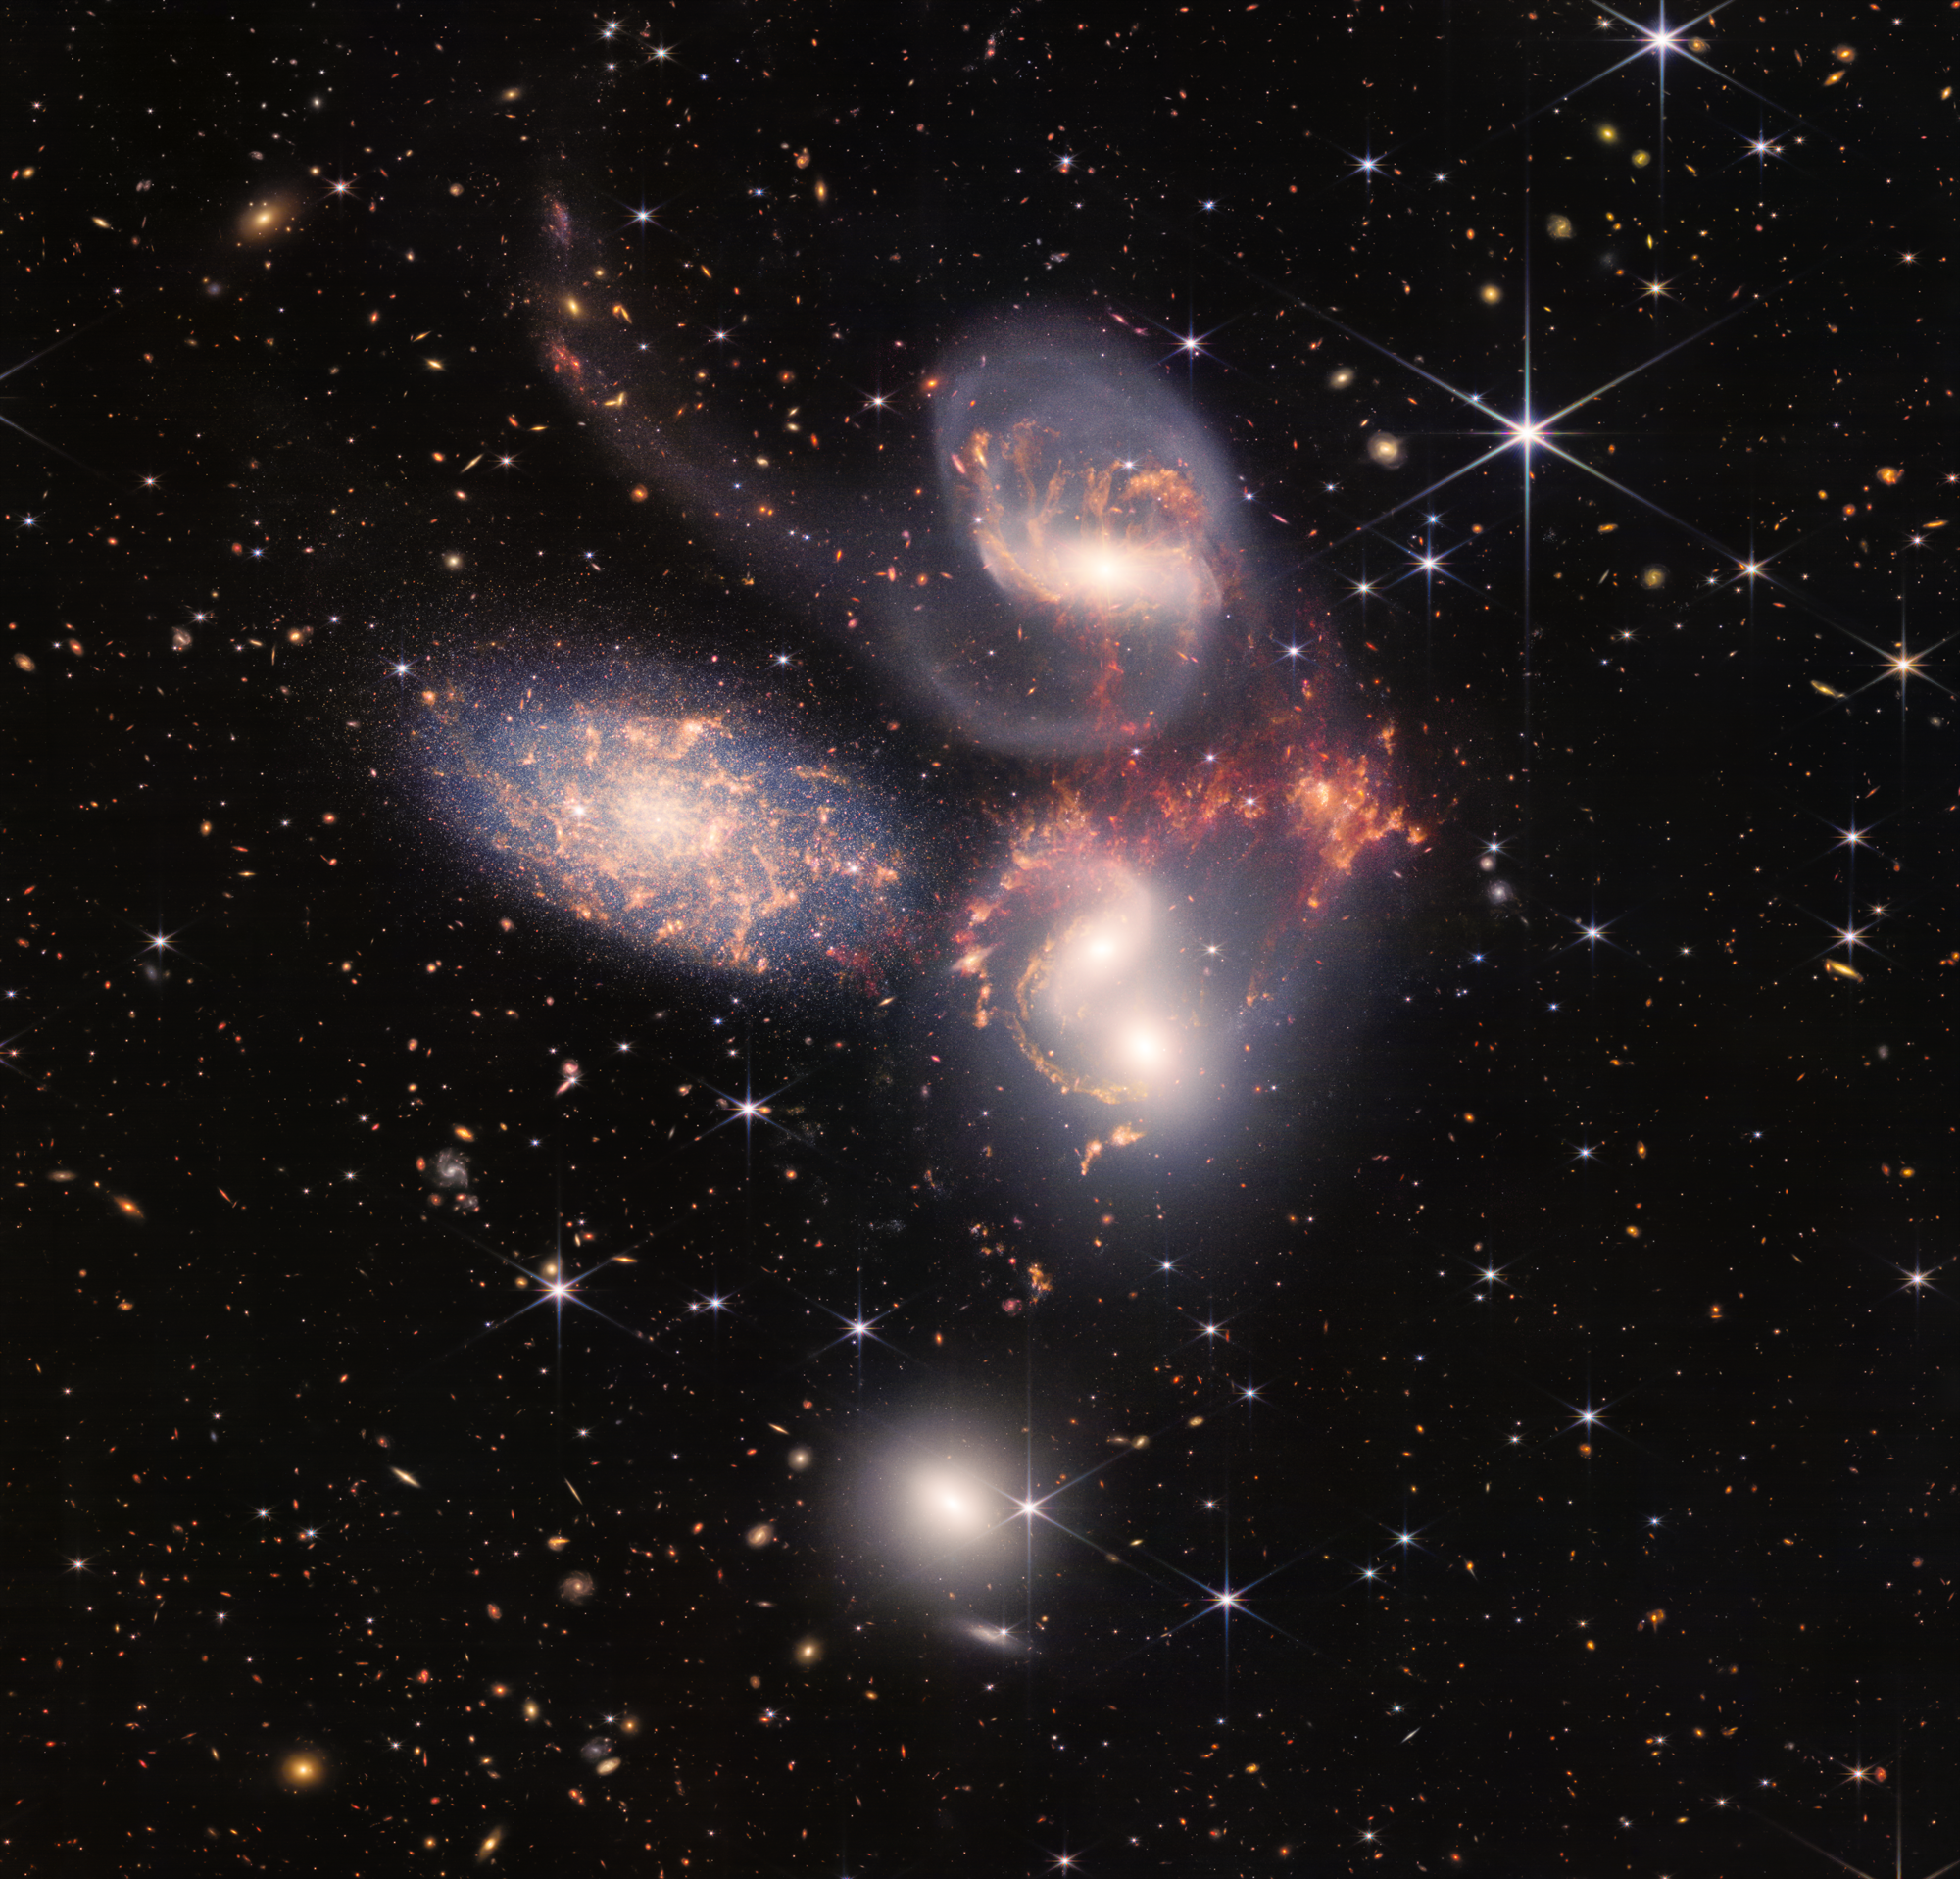 Stephans Quintet JWST Space Galaxy Cluster HCG 92 NASA ESA Stars Infrared James Webb Space Telescope 2000x1917